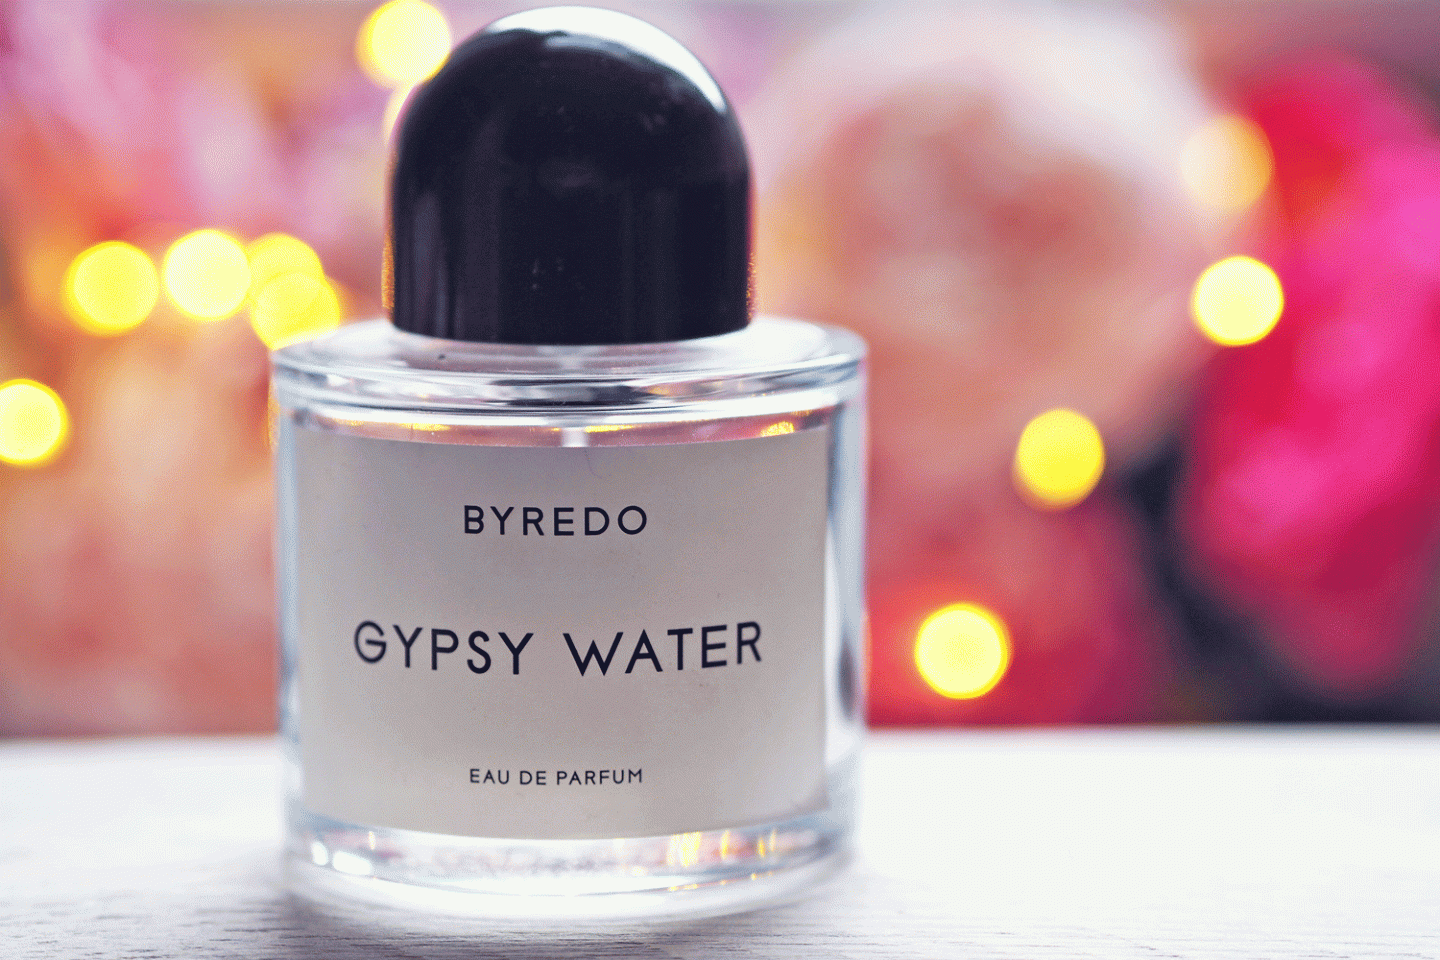 7 best Byredo Gypsy Water dupes (2023)